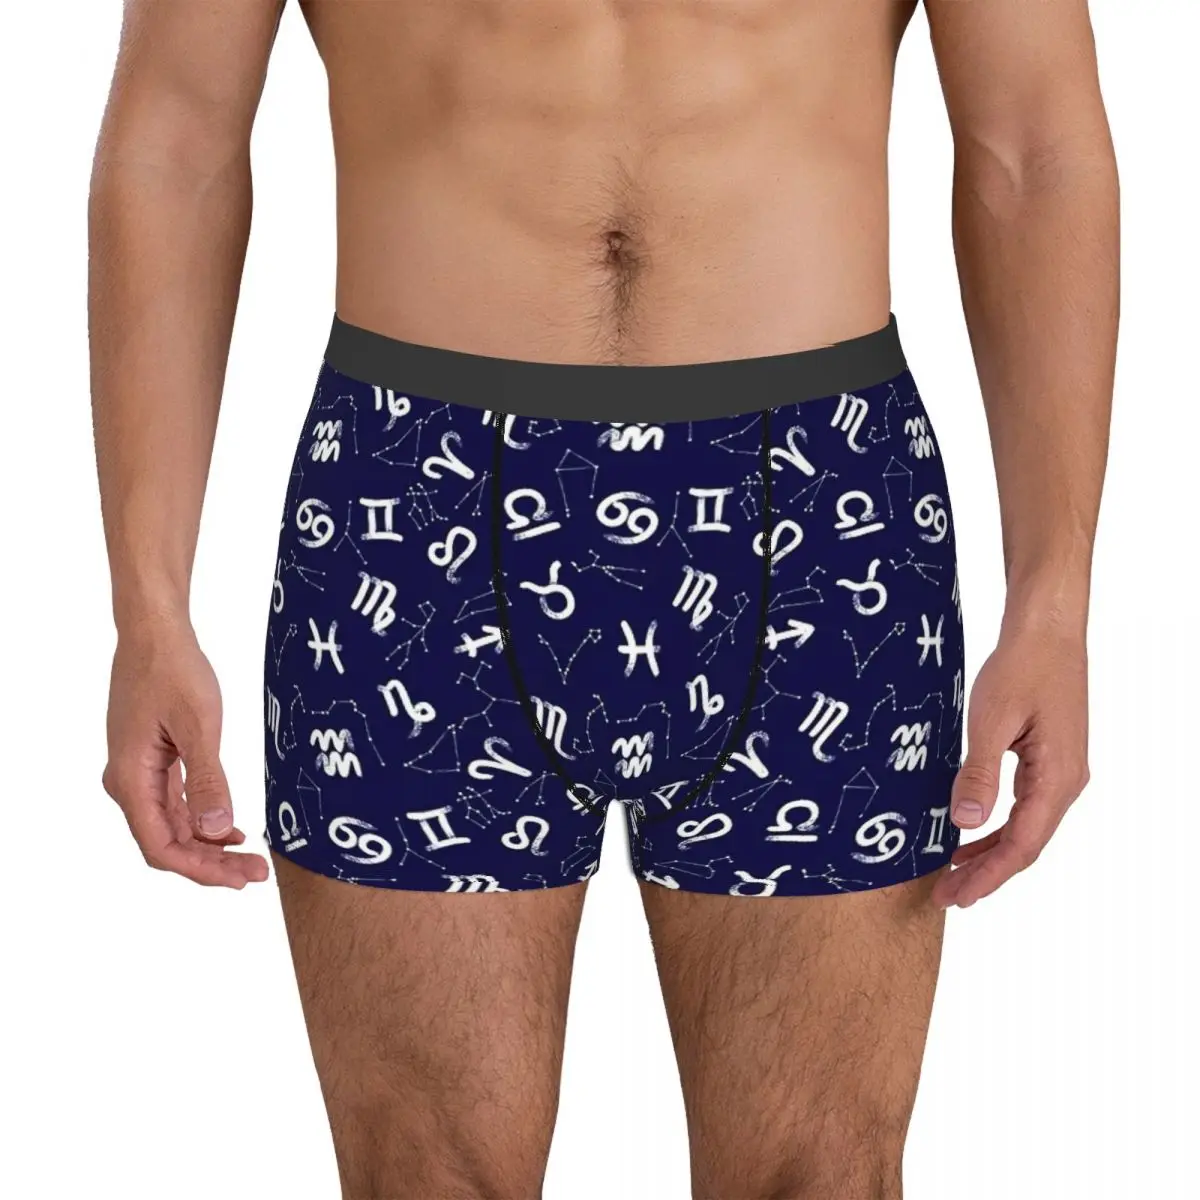 

Constellation Underpants Cotton Panties Men's Underwear Ventilate Shorts